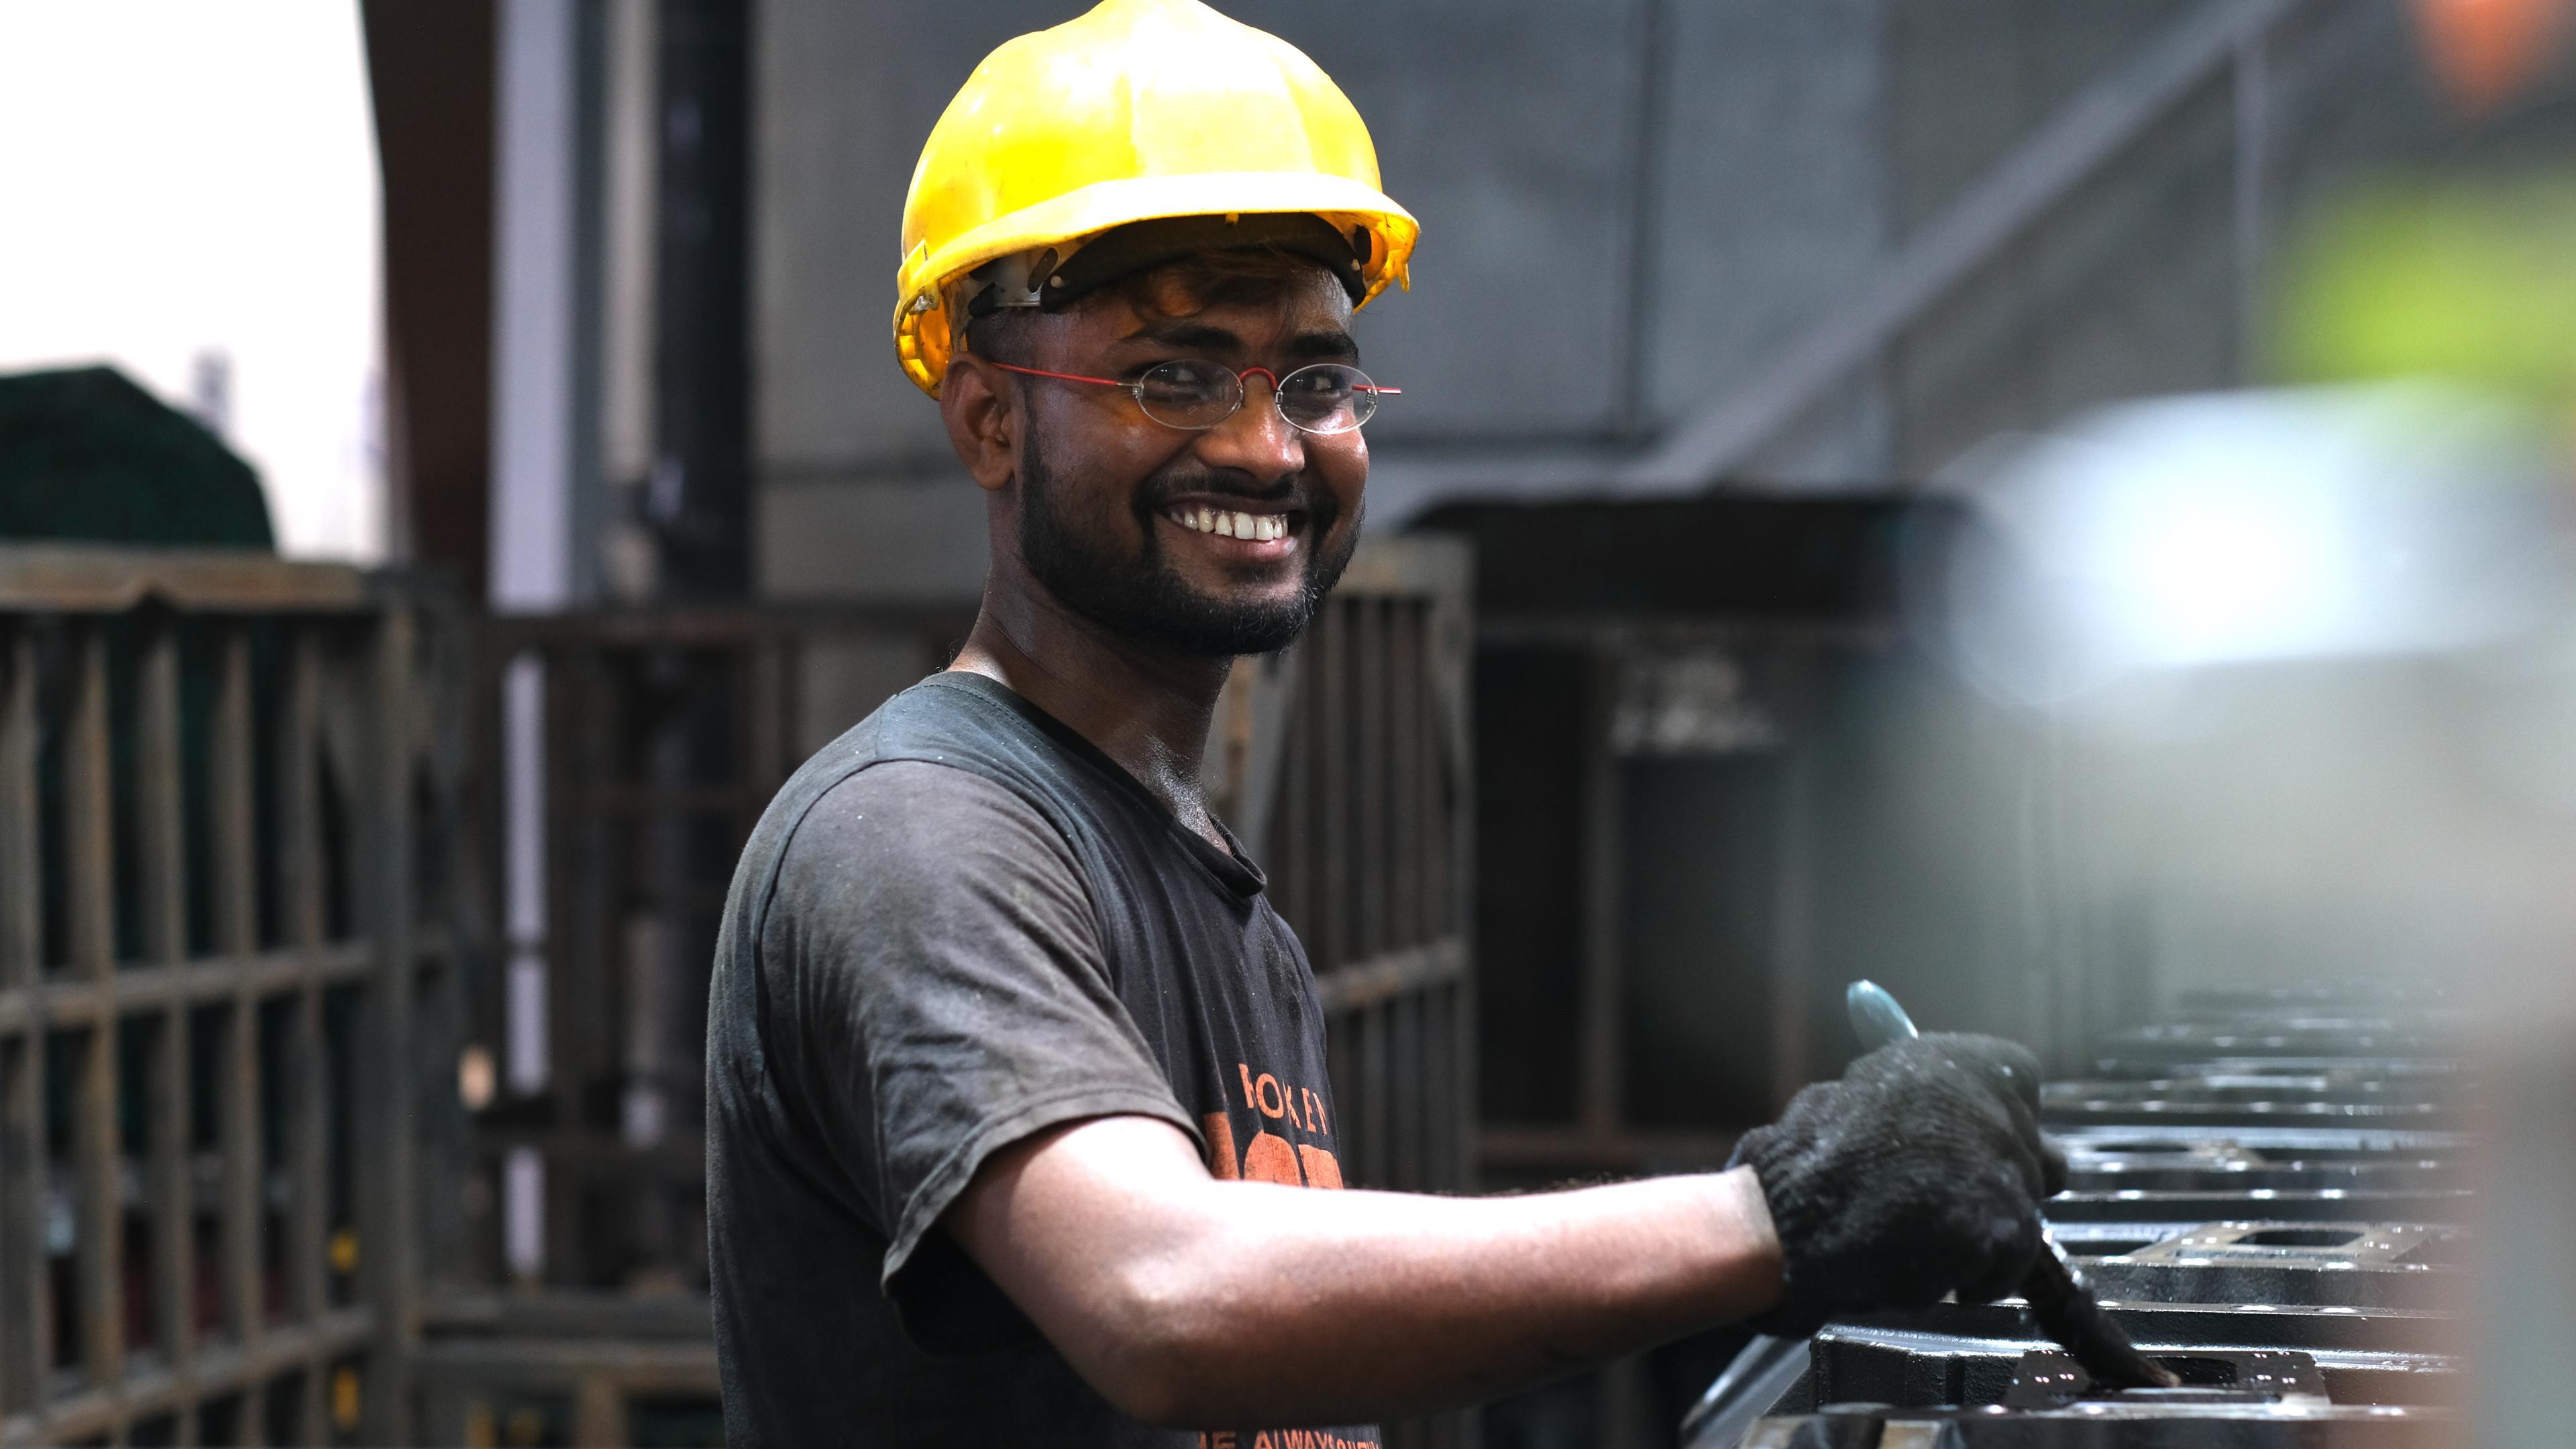 Steel worker in Kolkata at the machine